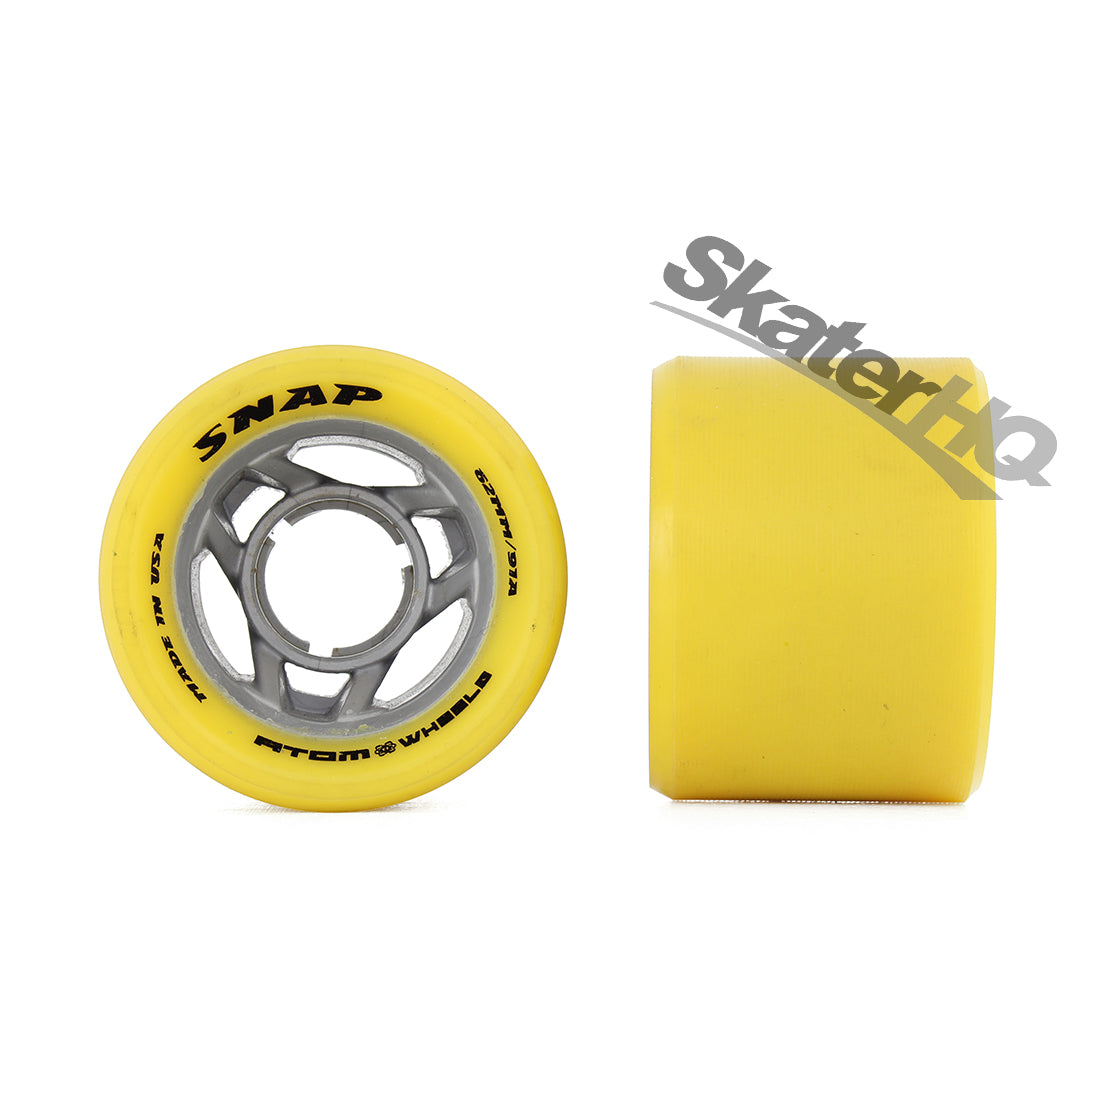 Atom Snap 62x44mm 91a 8pk - Yellow Roller Skate Wheels